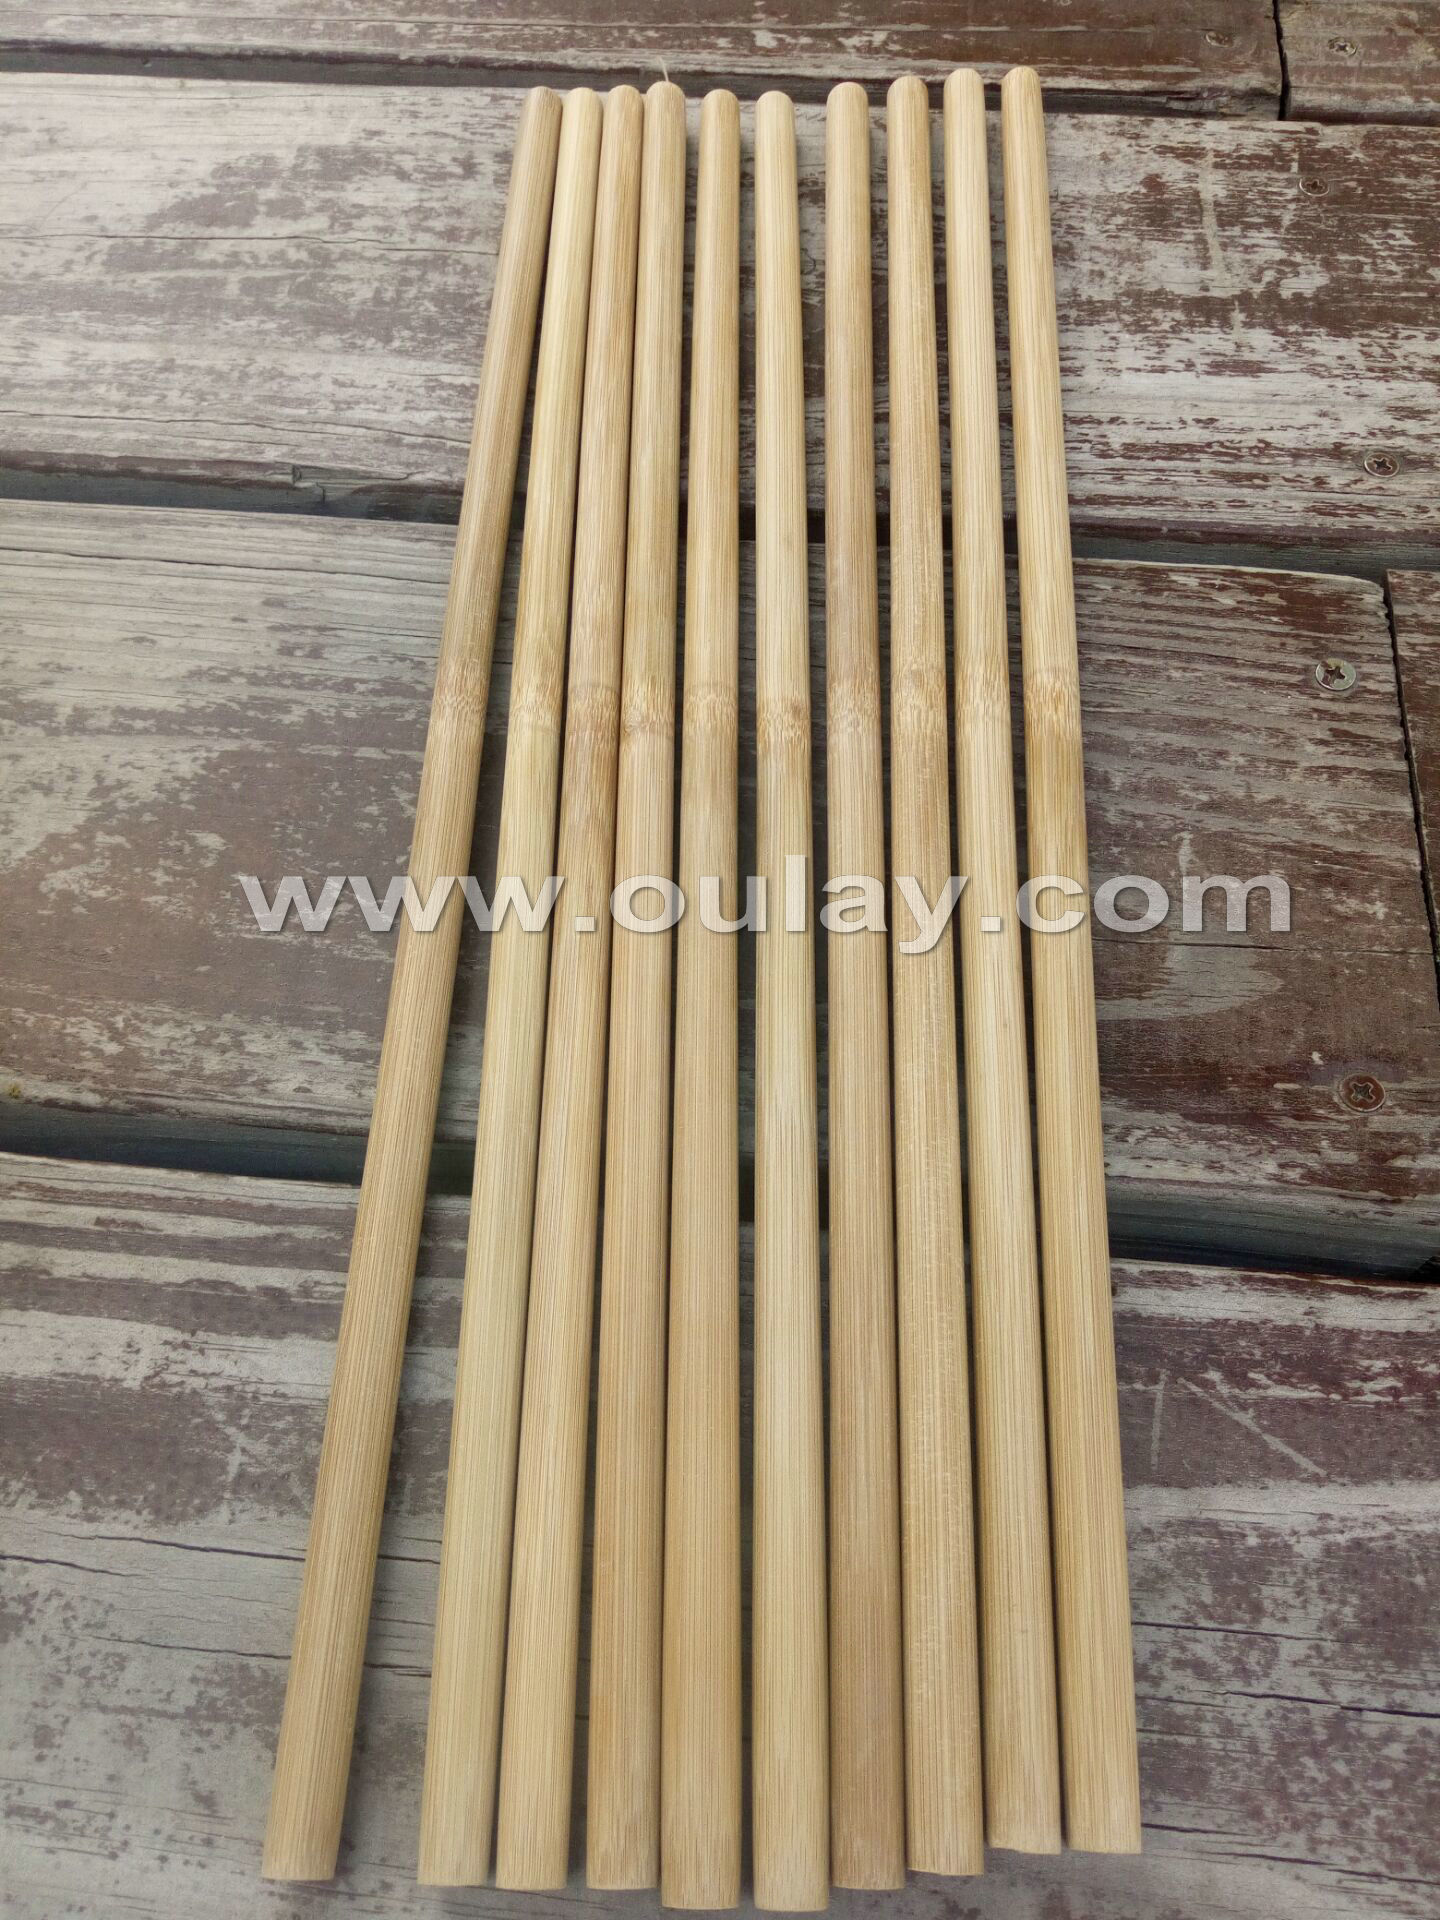 38cm dia12-13mm bamboo timpani mallets